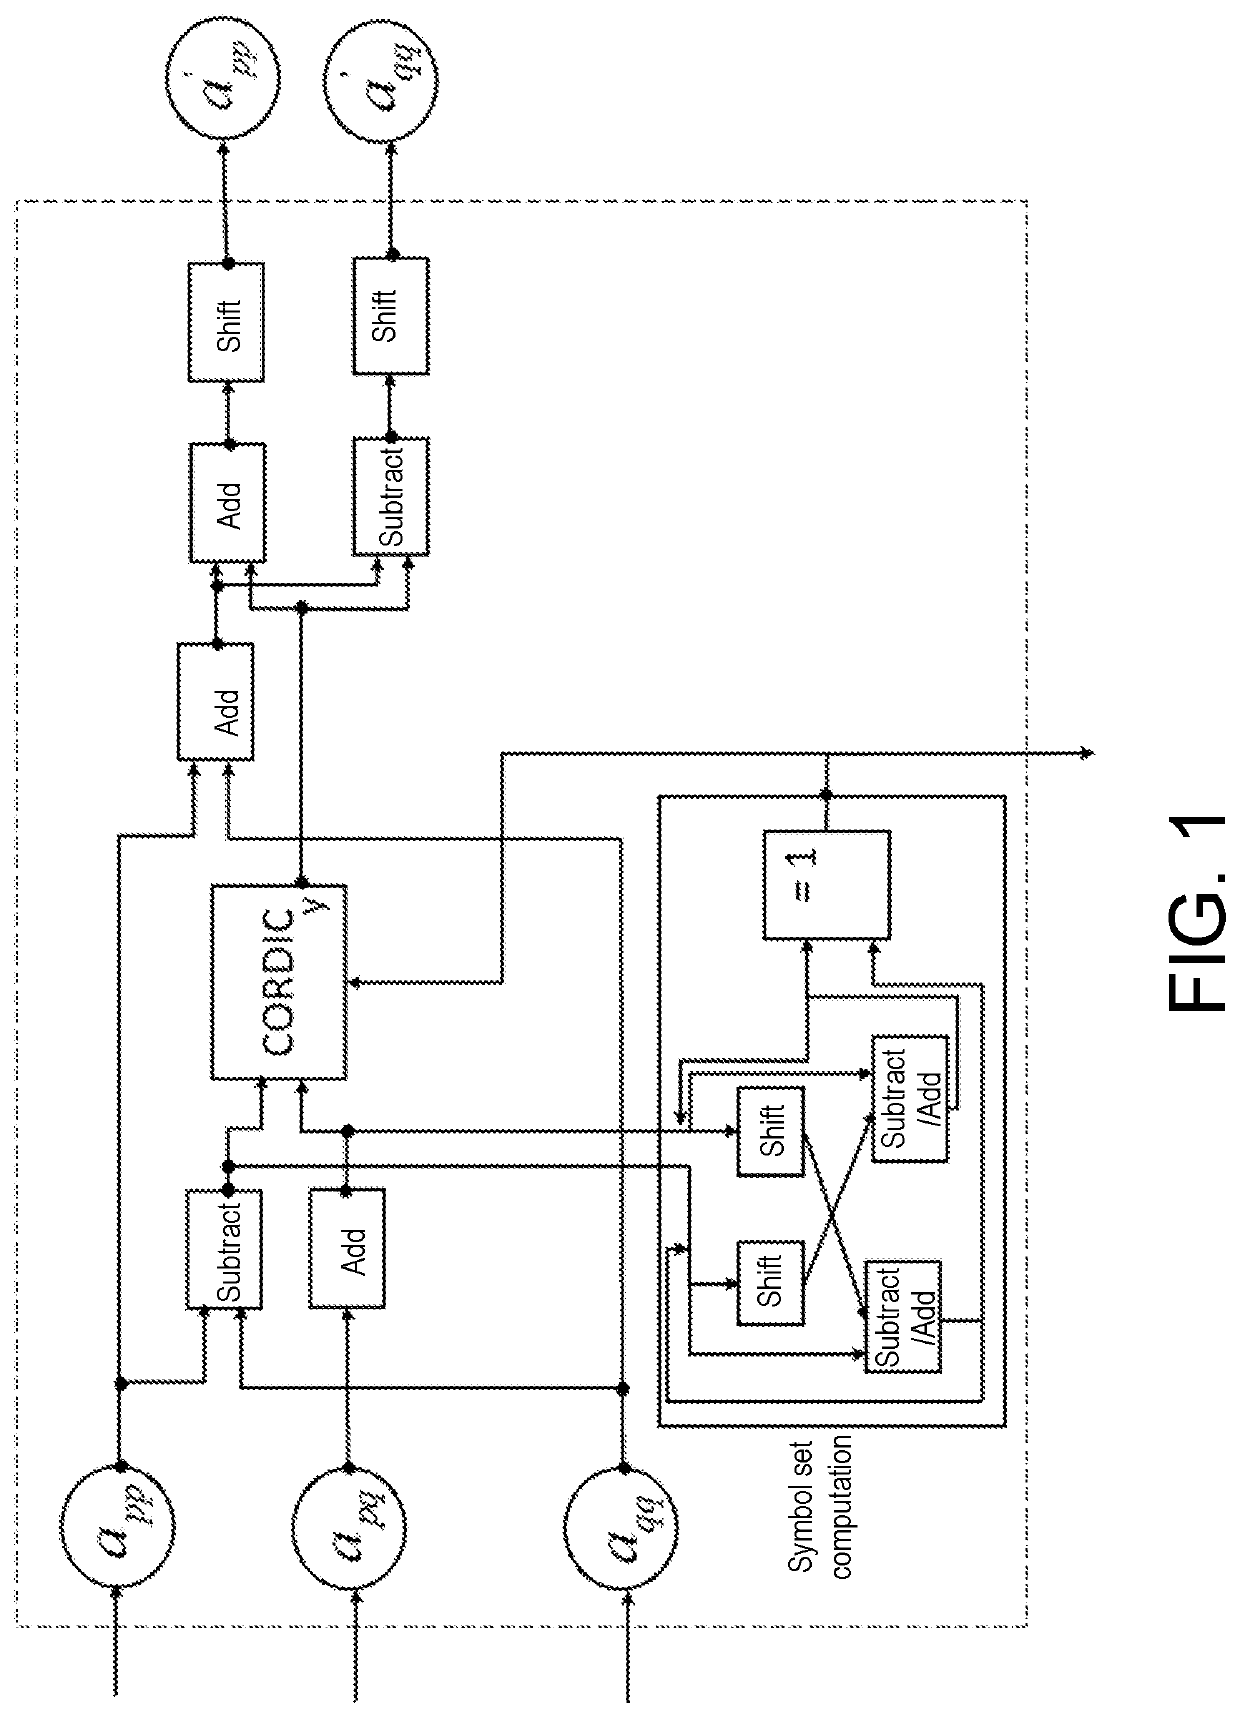 Method of realizing accelerated parallel jacobi computing for FPGA